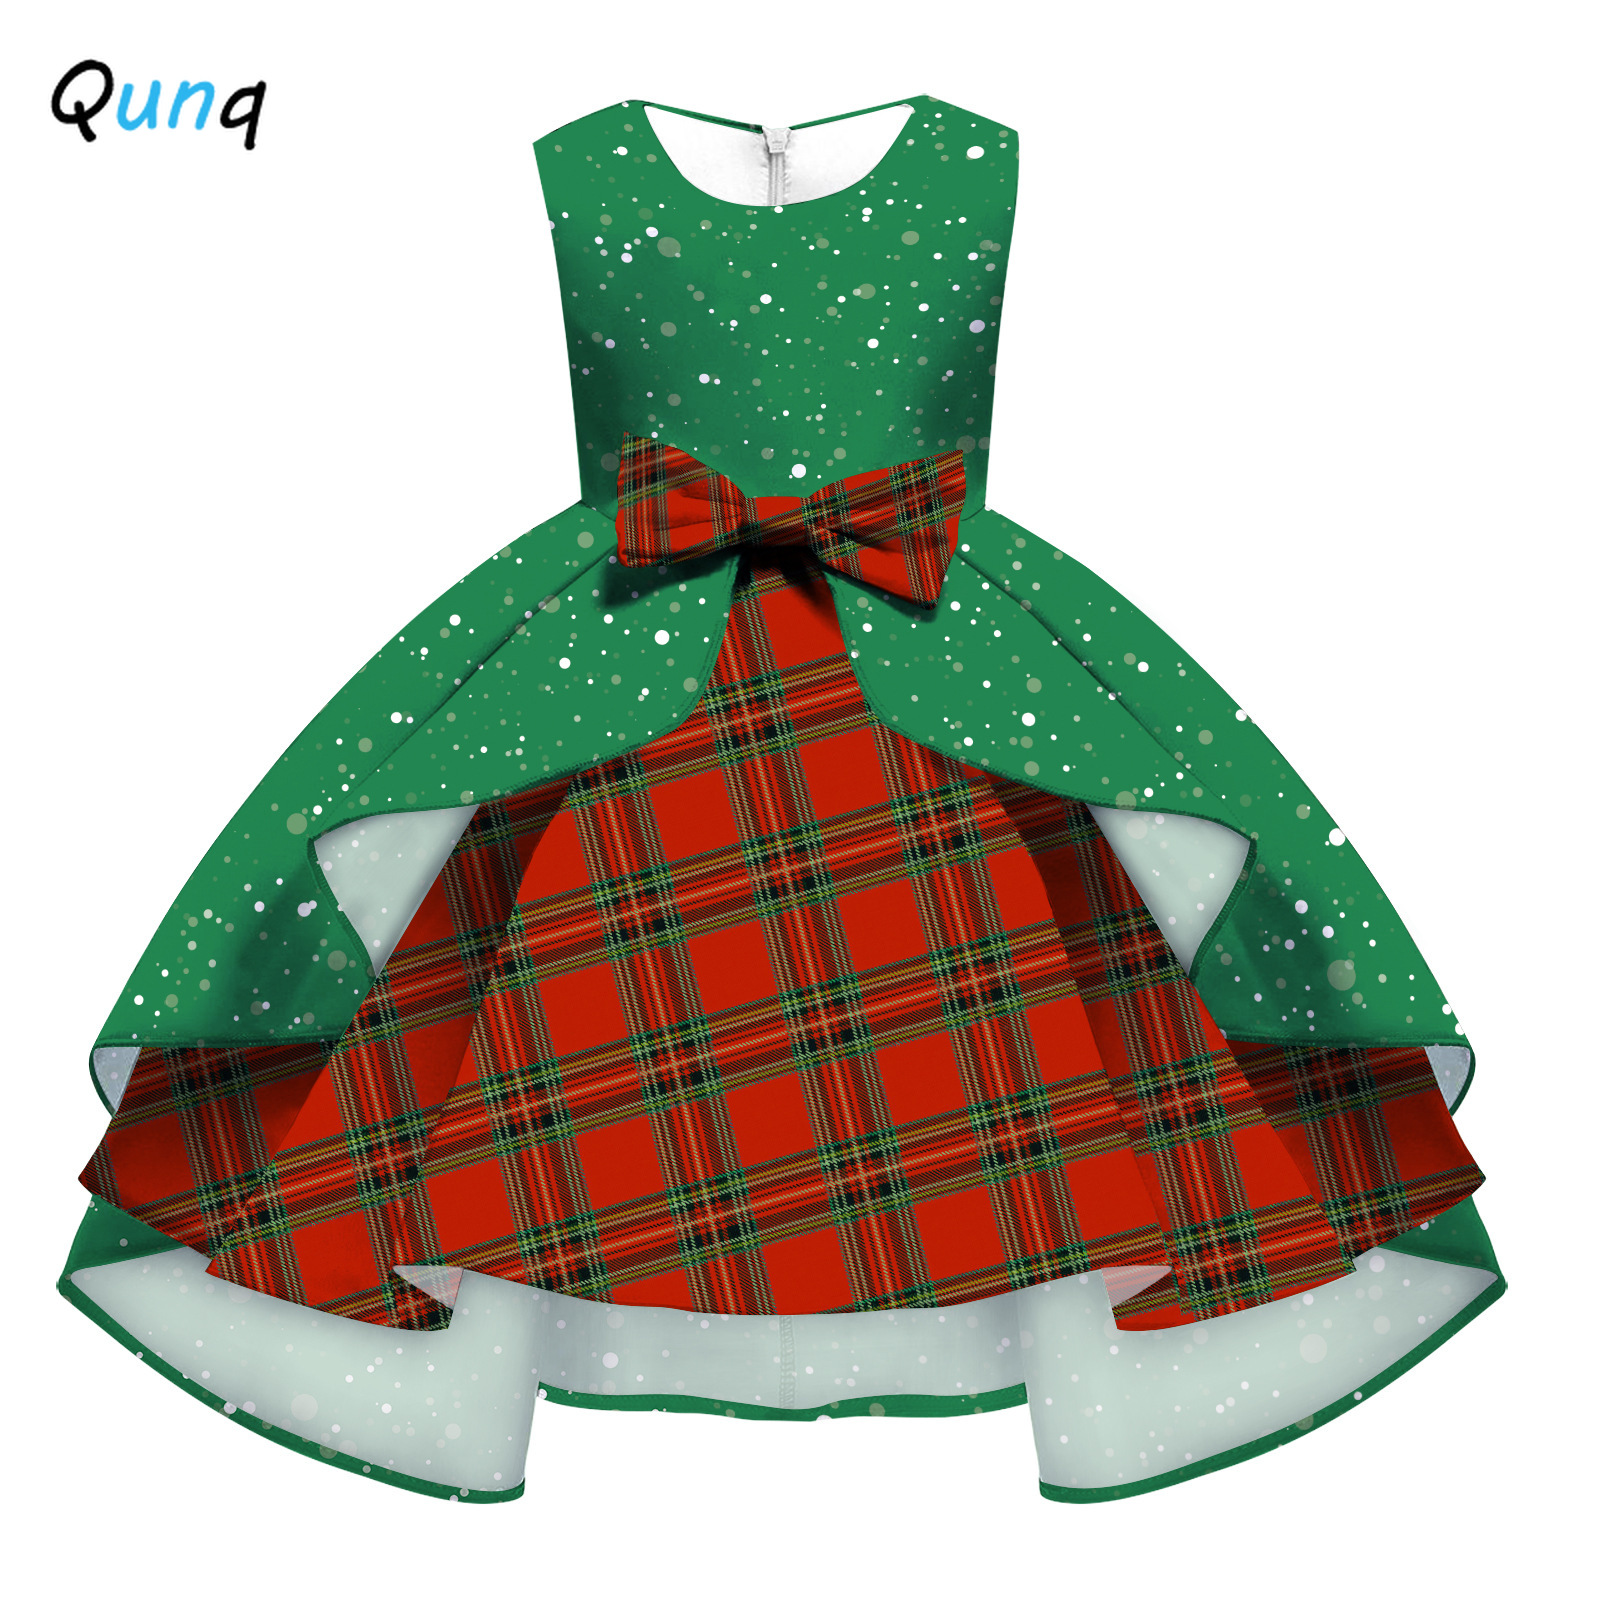 Christmas Girl Dress Digital Print Snowflake Plaid Pattern Kids Party Dresses for Girl Toddler Teen Children Princess Clothing